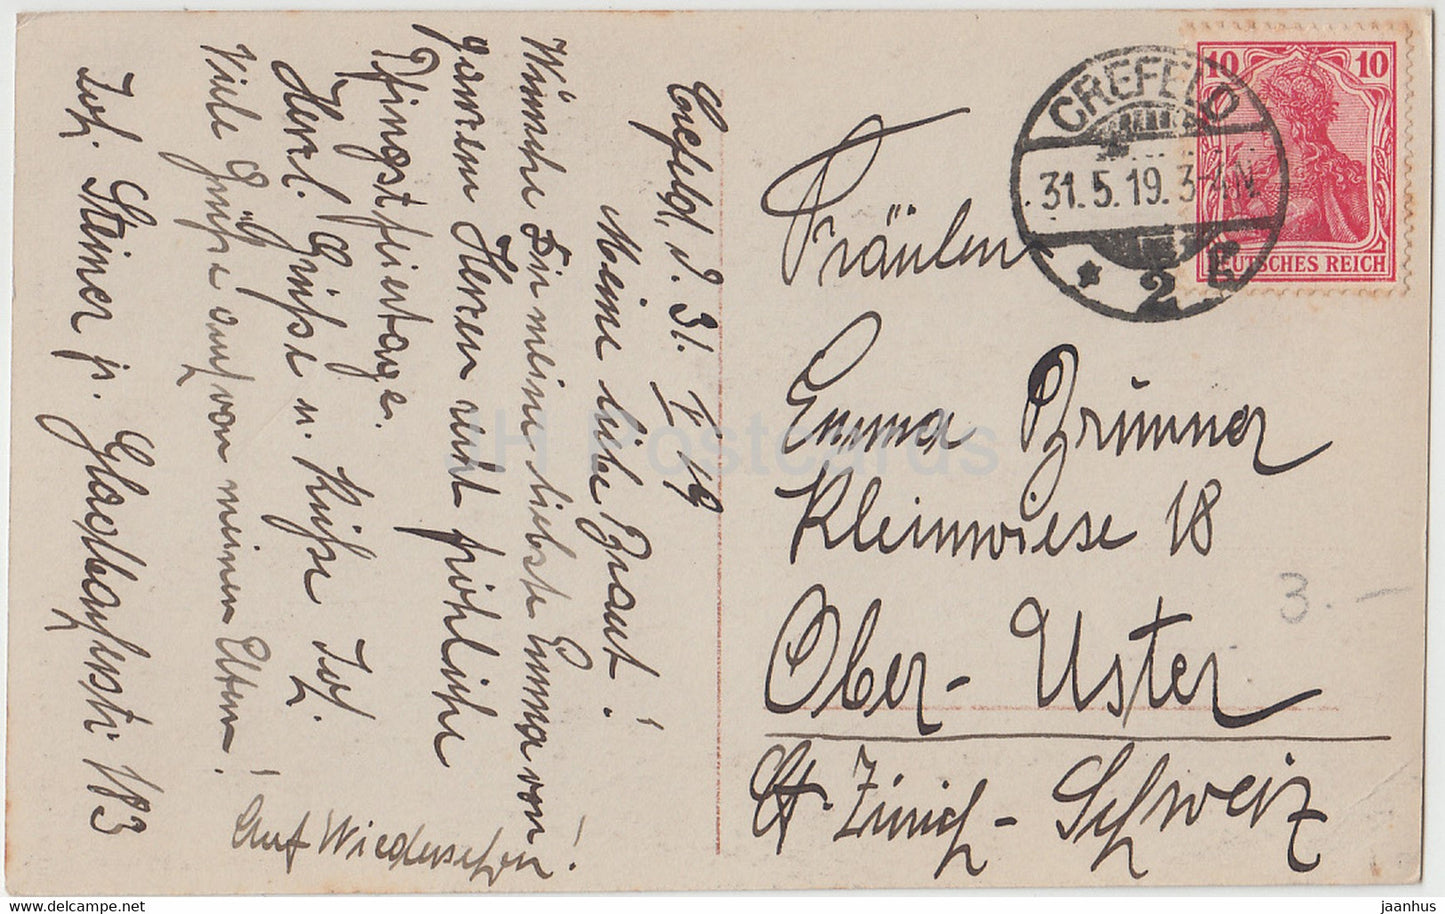 Carte de vœux de Pentecôte - Innige Grusse zum pfingstfest - HB 7483/1 - garçon - carte postale ancienne - 1919 - Allemagne - utilisé